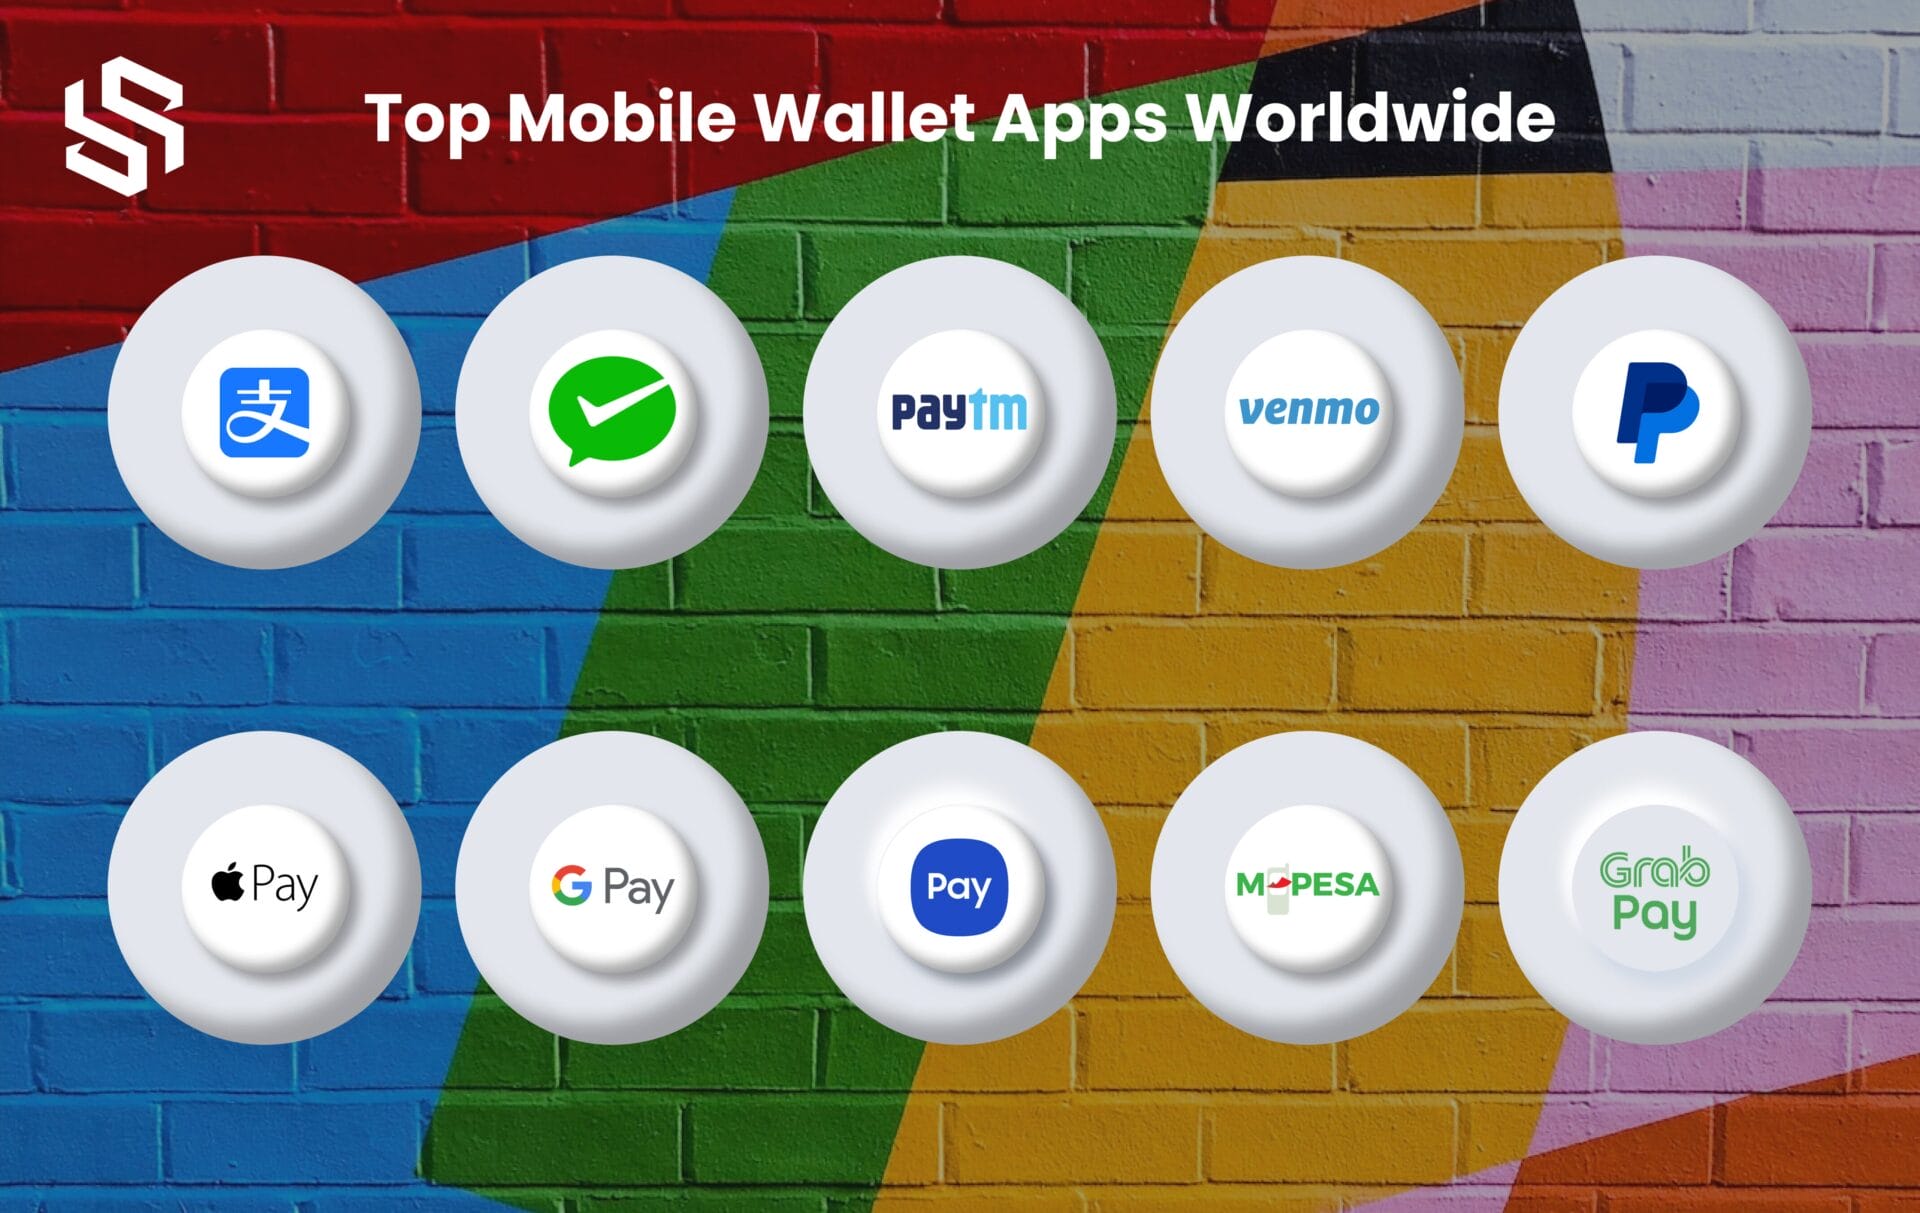 Top Mobile Wallet Apps Worldwide